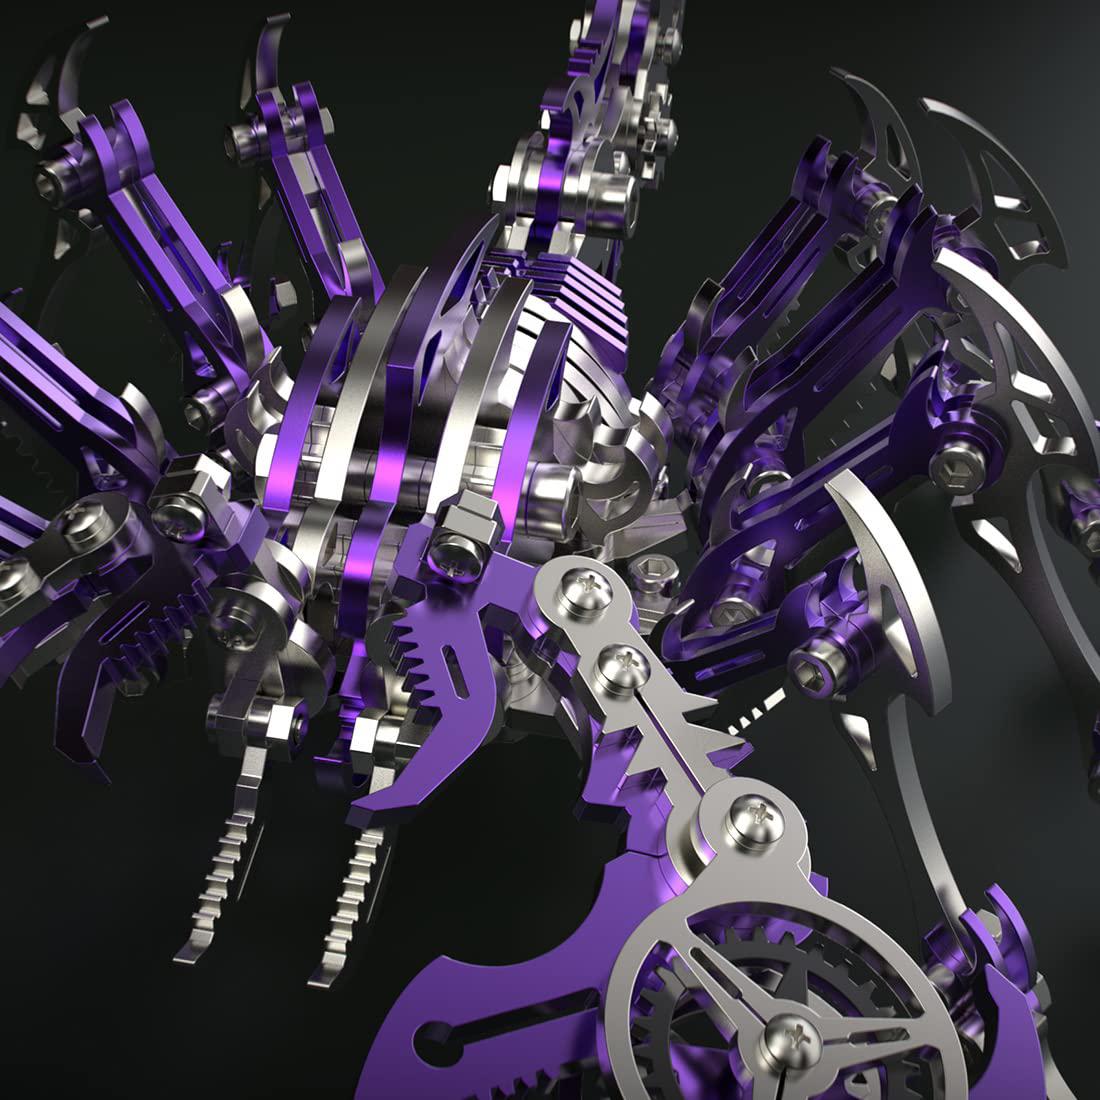 konhaovf purple 3d metal puzzle scorpion for adults, diy 3d metal model kits to build with tool, colorful 3d desktop model ki